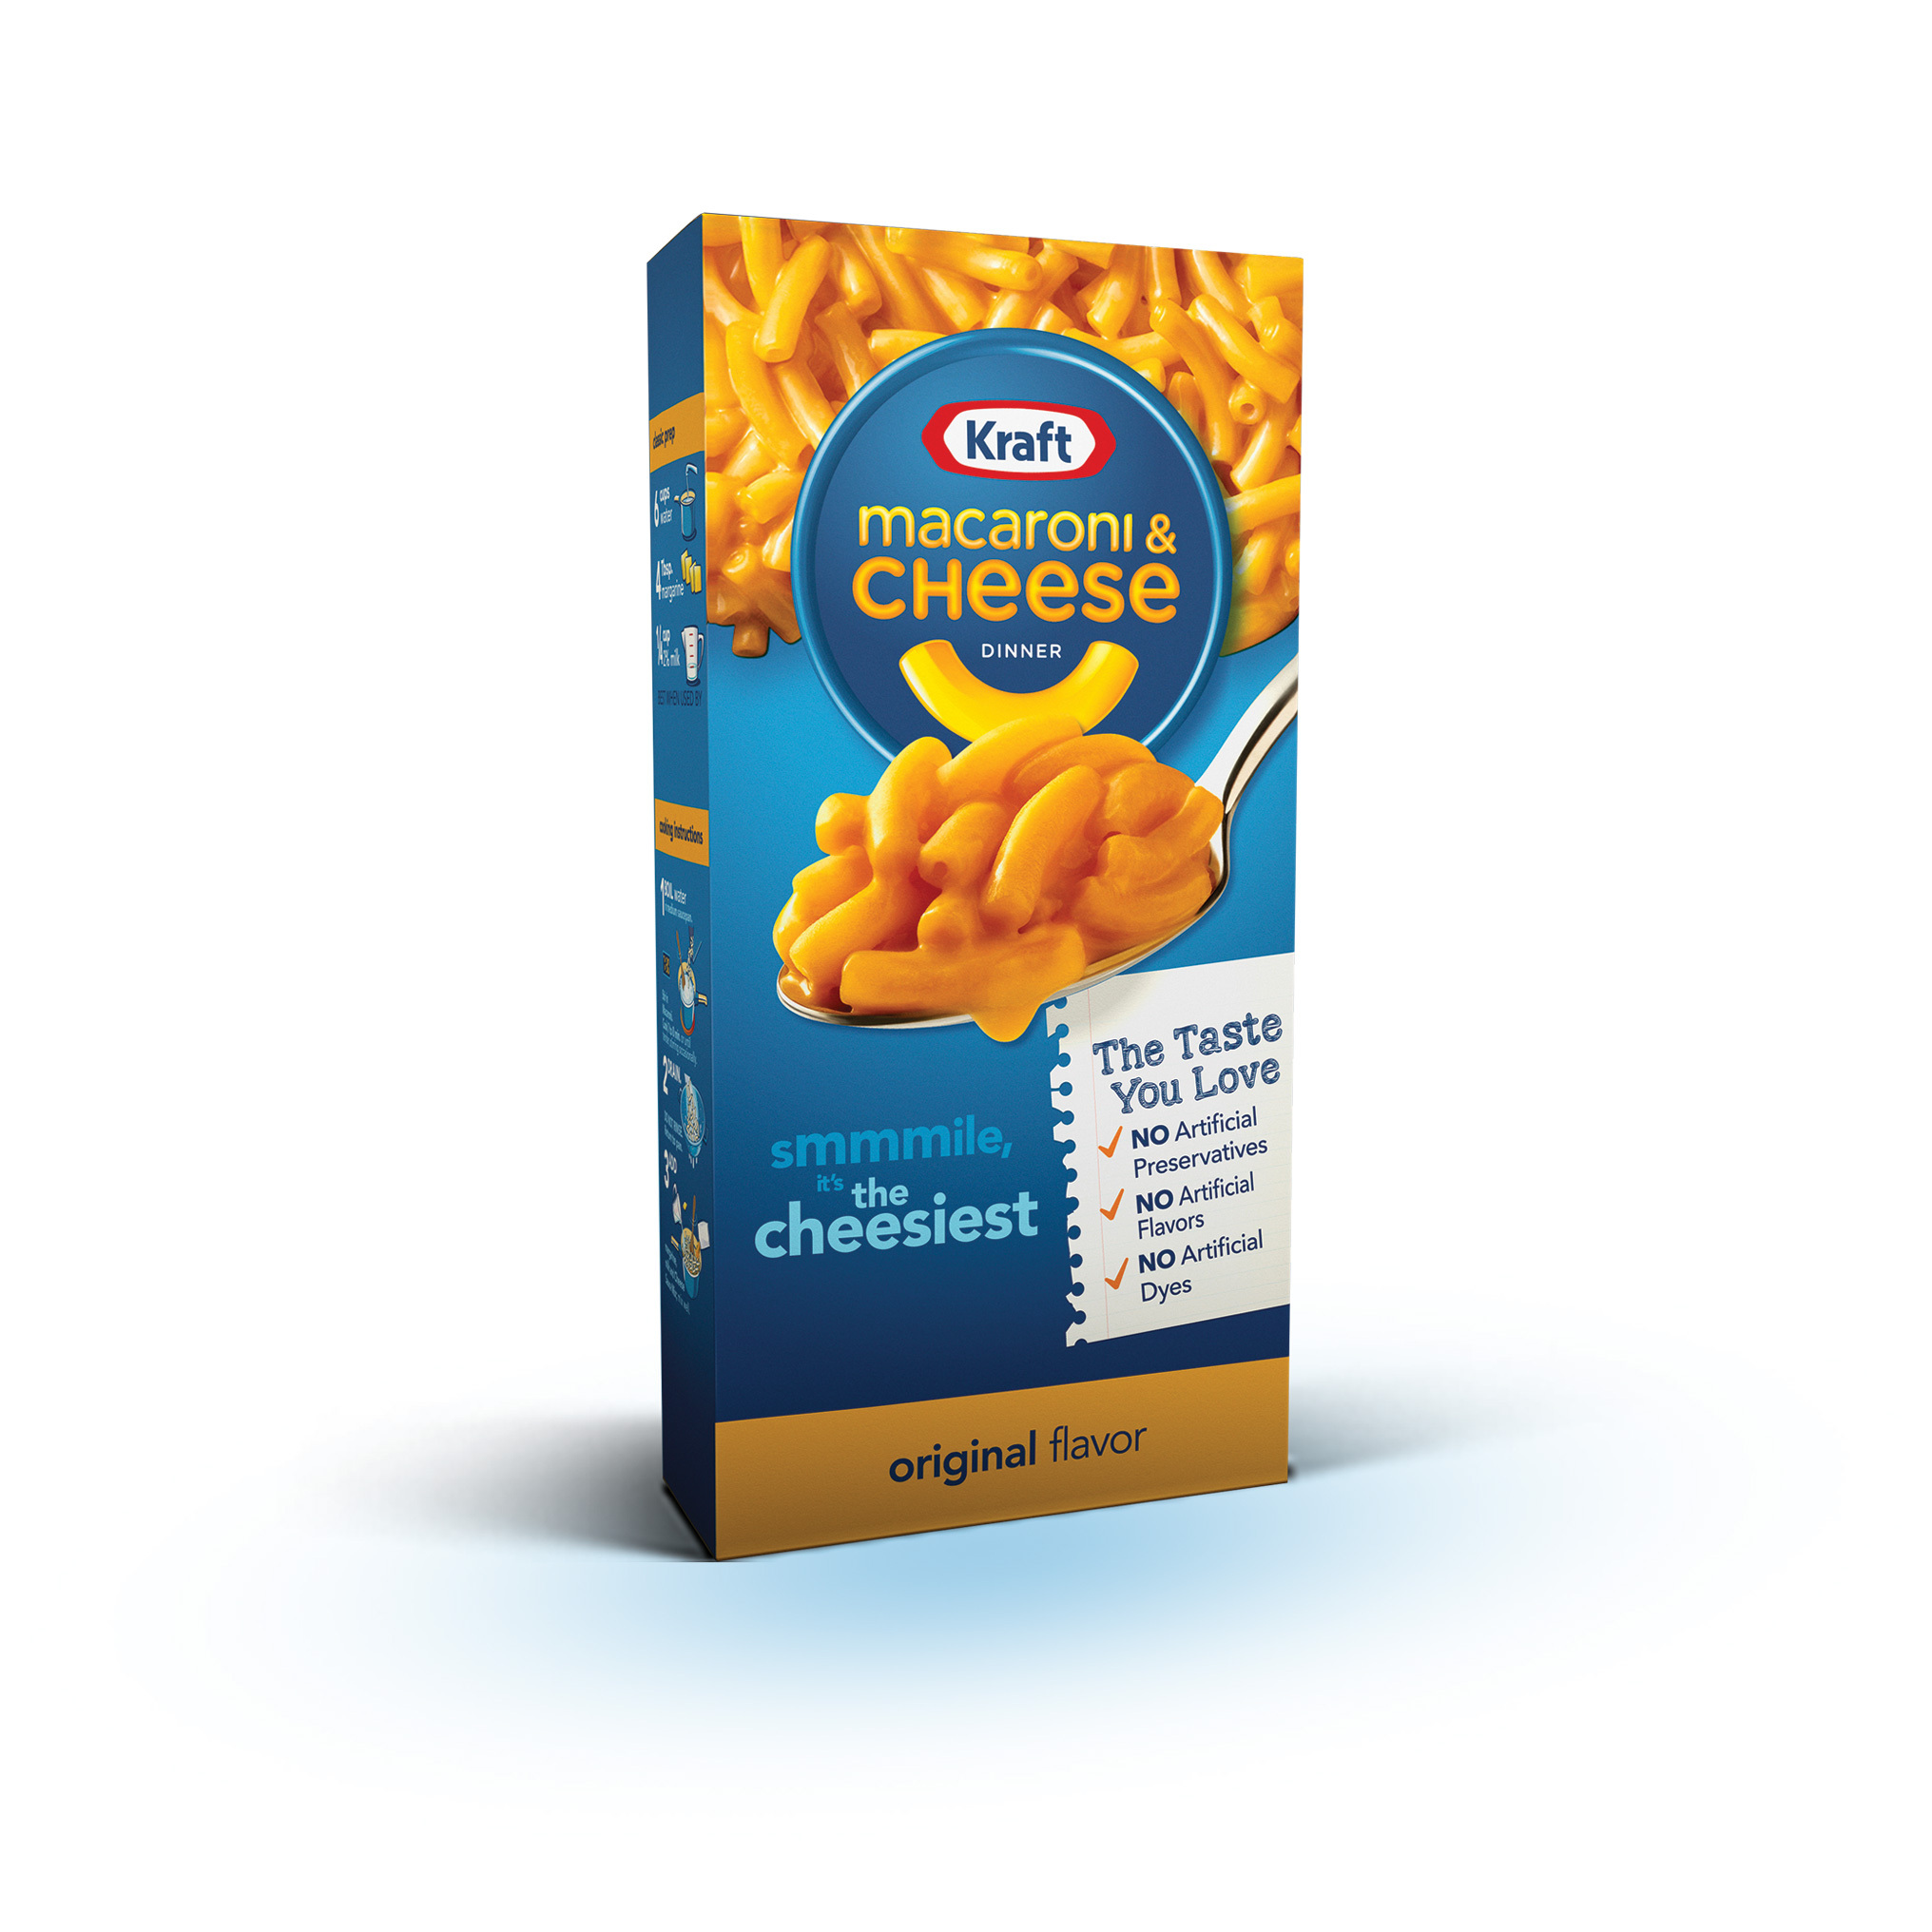 The Kraft Heinz Company - It's Official: Kraft Mac & Cheese Is